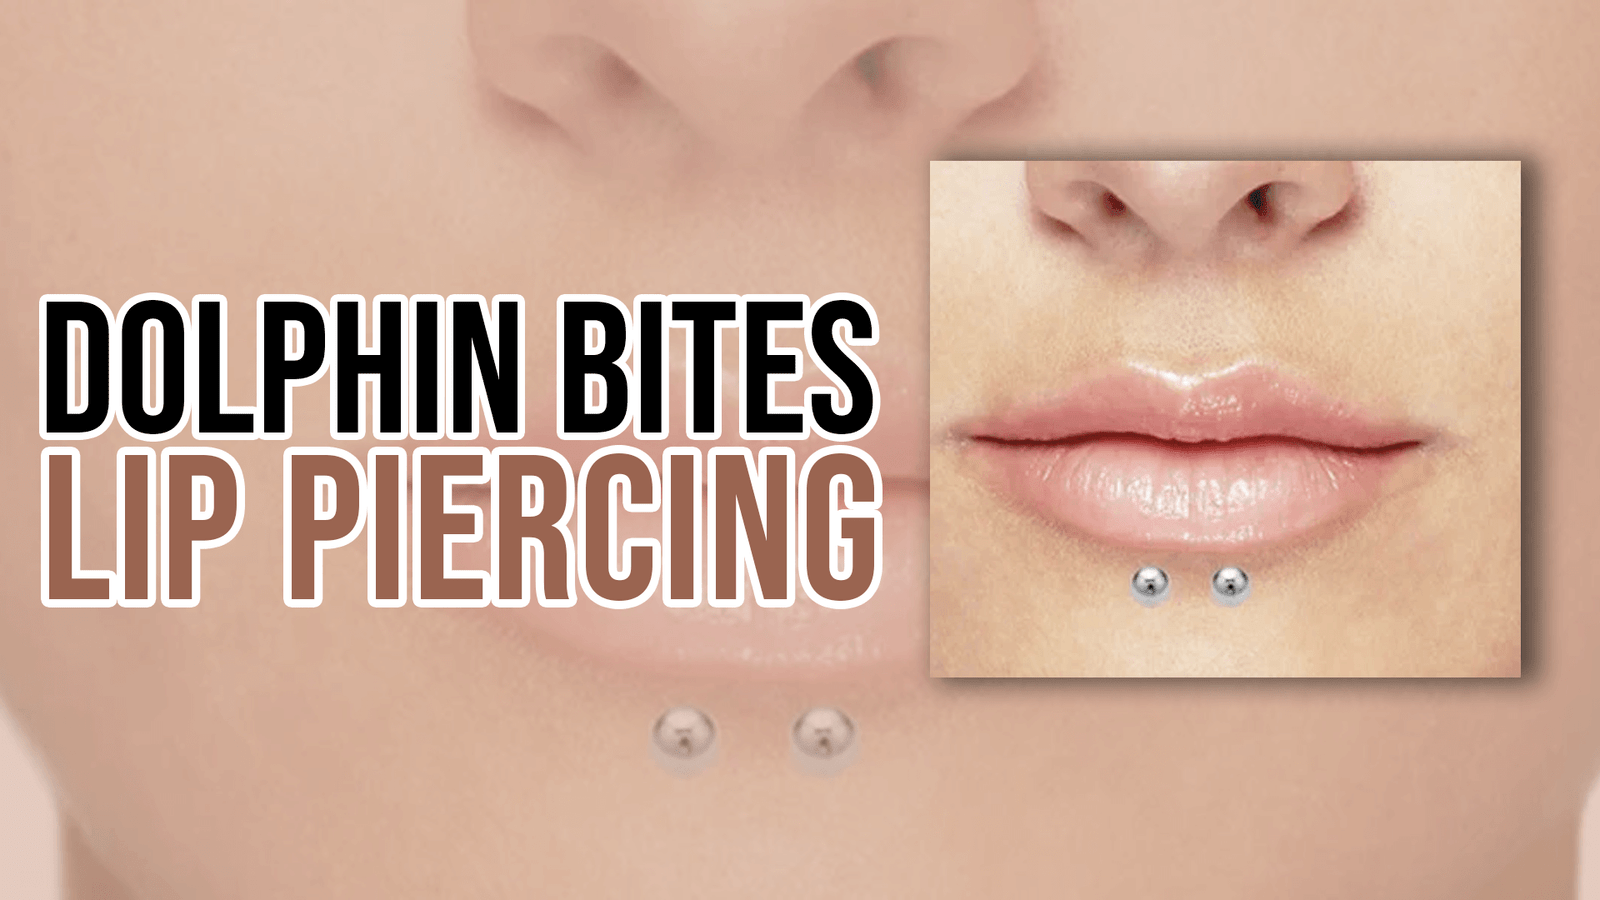 Dolphin Bites Lip Piercing